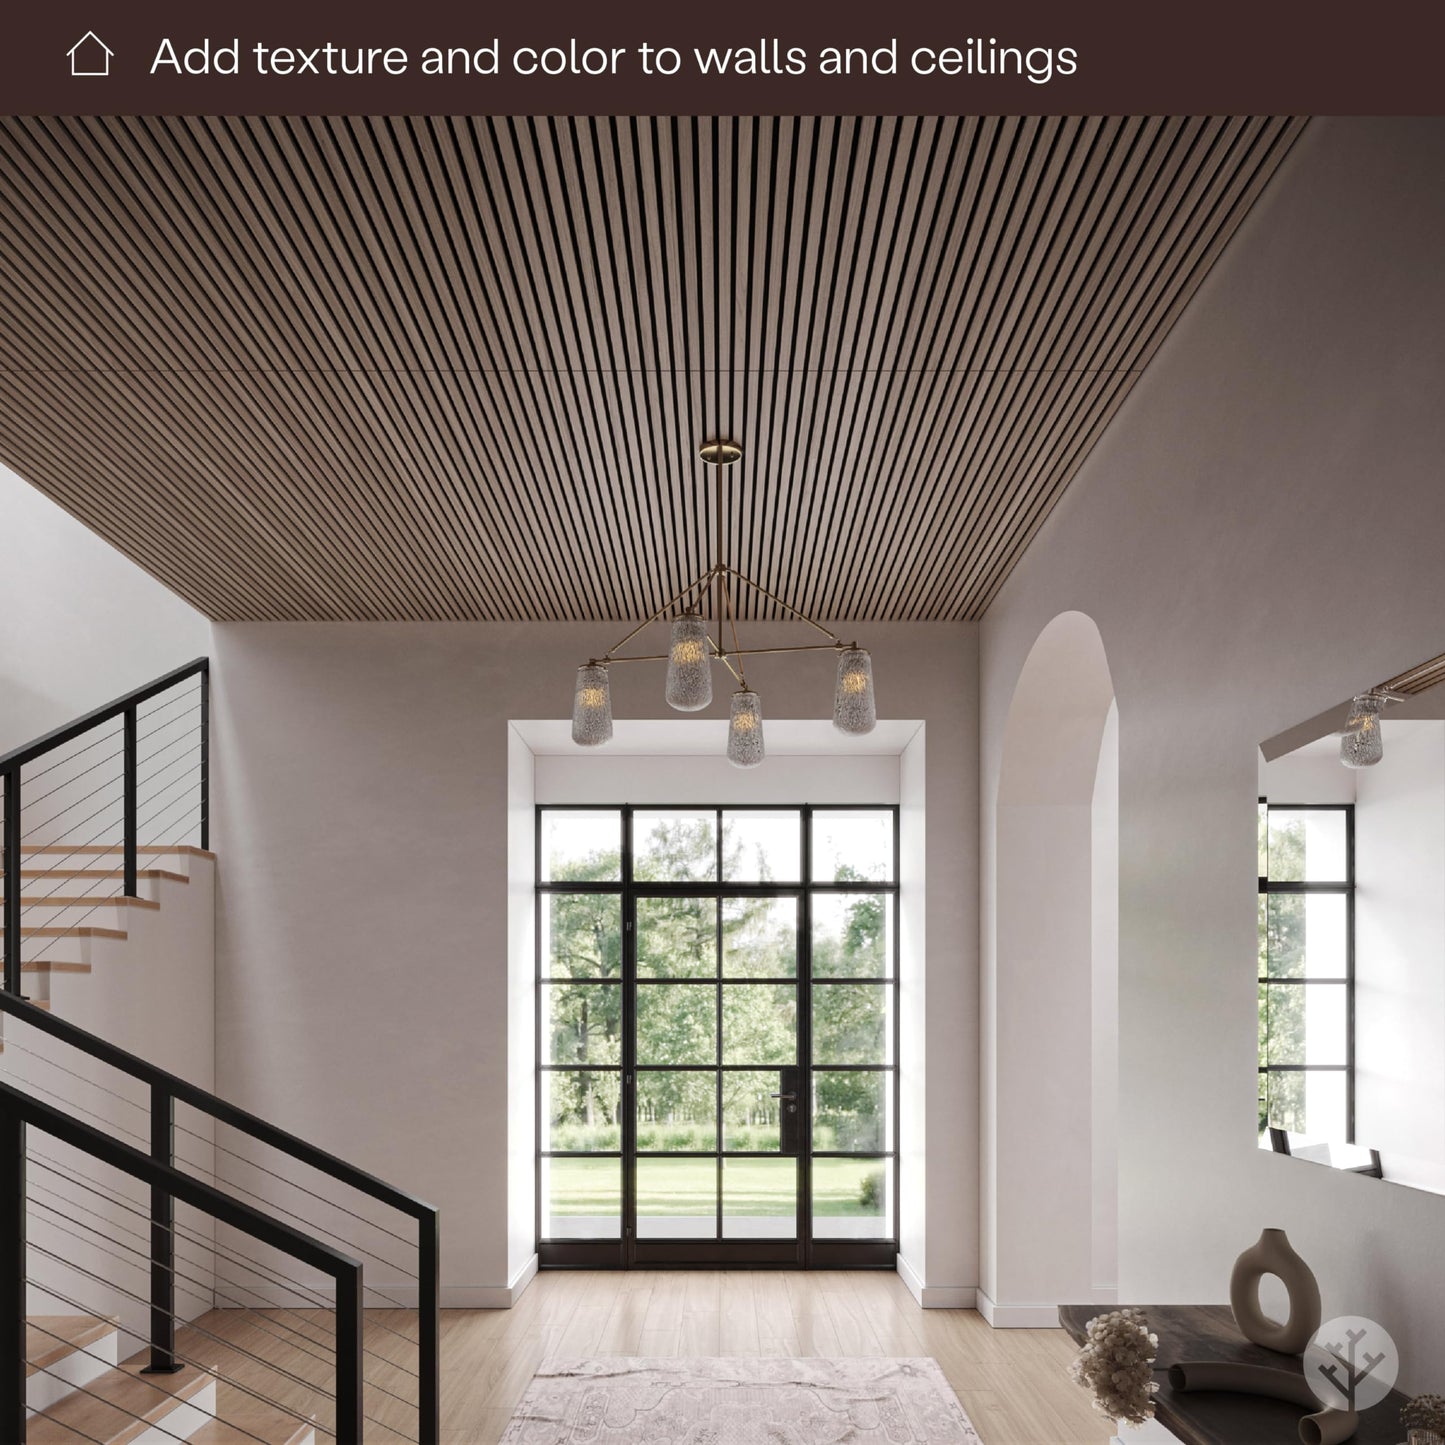 SLATPANEL Two Acoustic Wood Wall Veneer Slat Panels - Natural Walnut | 94.49” x 12.6” Each | Soundproof Paneling | Interior Sound Absorption Decor |